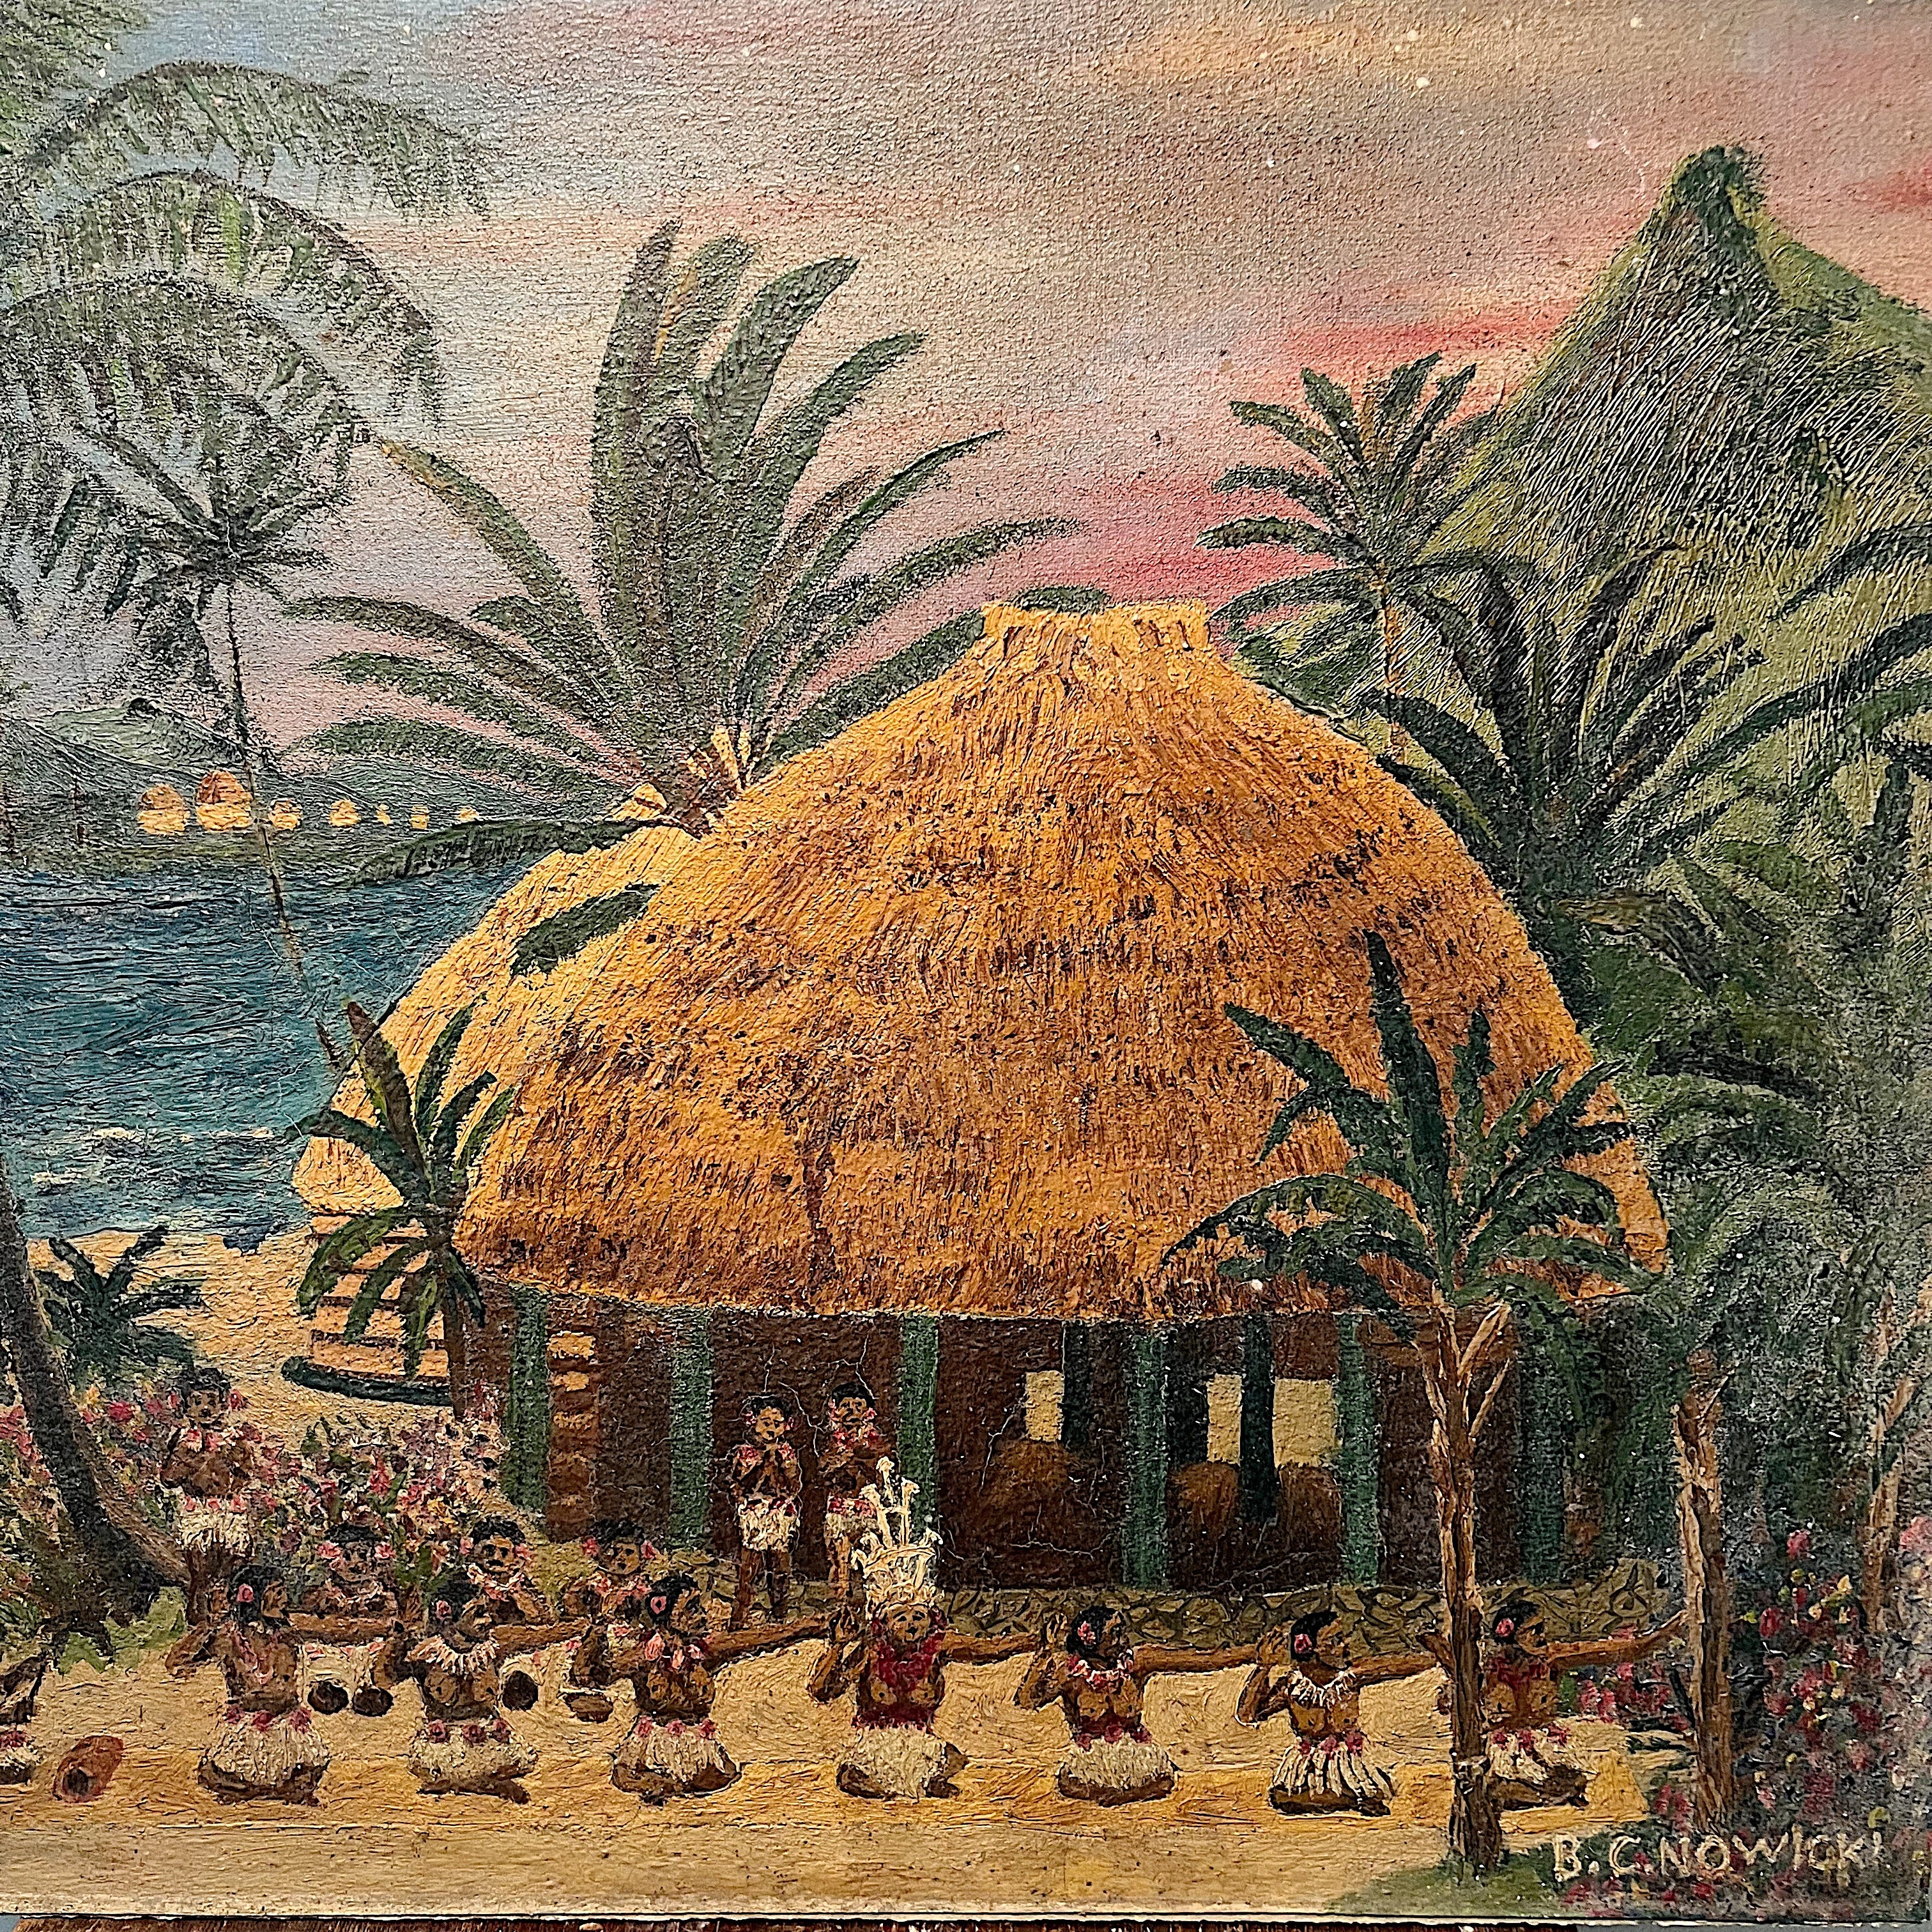 1940s Hawaiian Painting of Luau Ceremony by B.C. Nowicki - Rare Unusual Folk Art Paintings - Milwaukee Estate - Oil on Canvas Board - AS IS